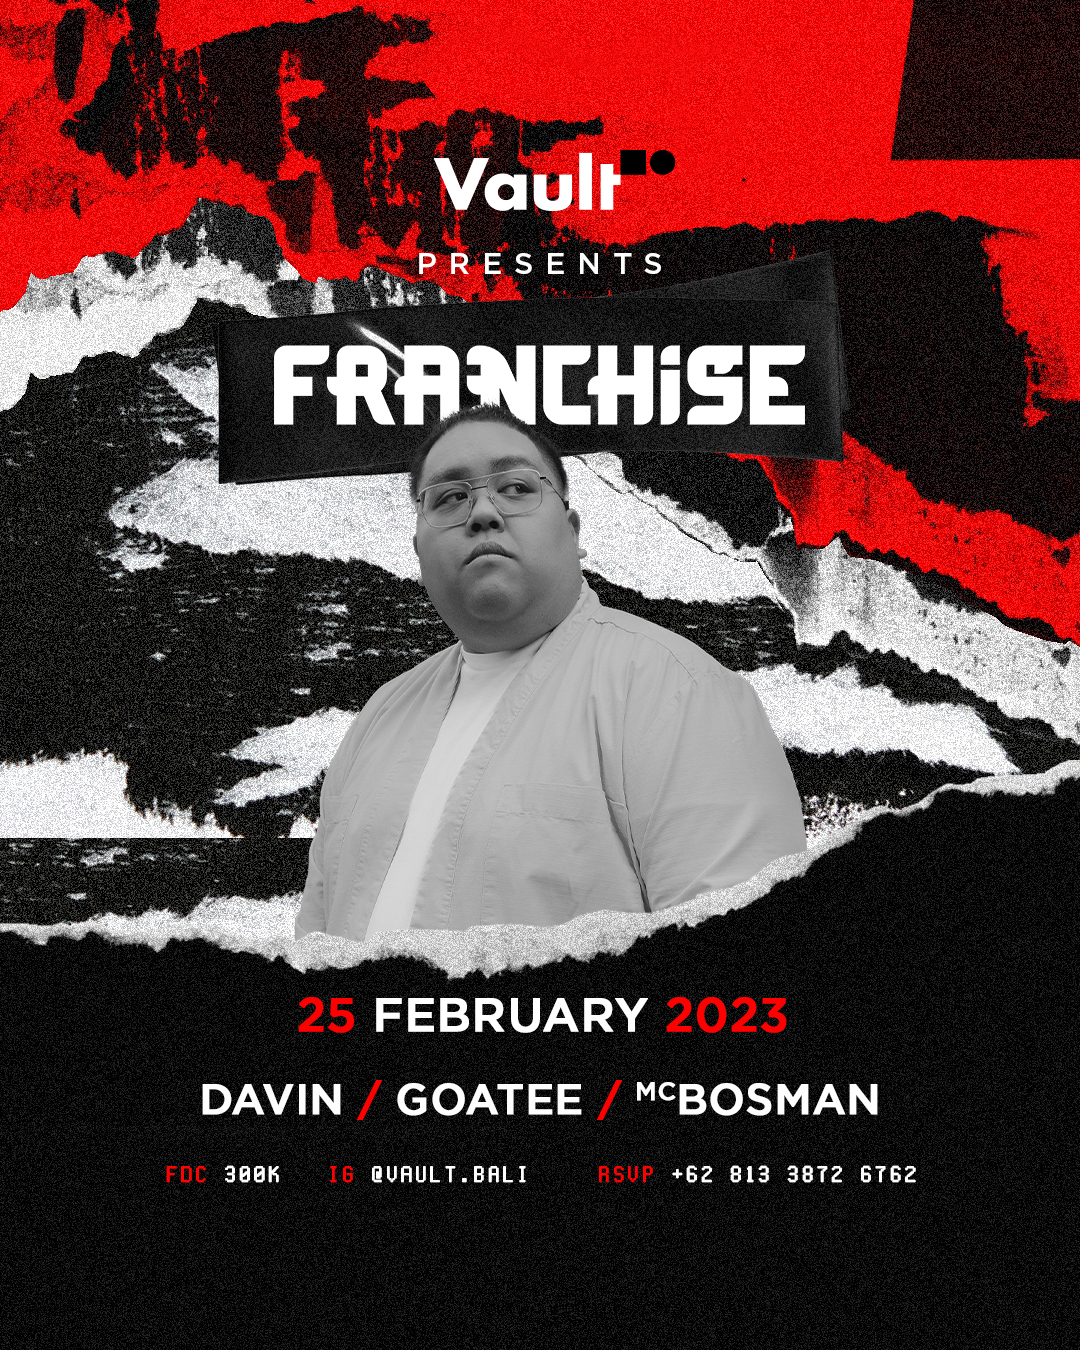 VAULT PRESENTS FRANCHISE – FRIDAY FEBRUARY 25TH thumbnail image